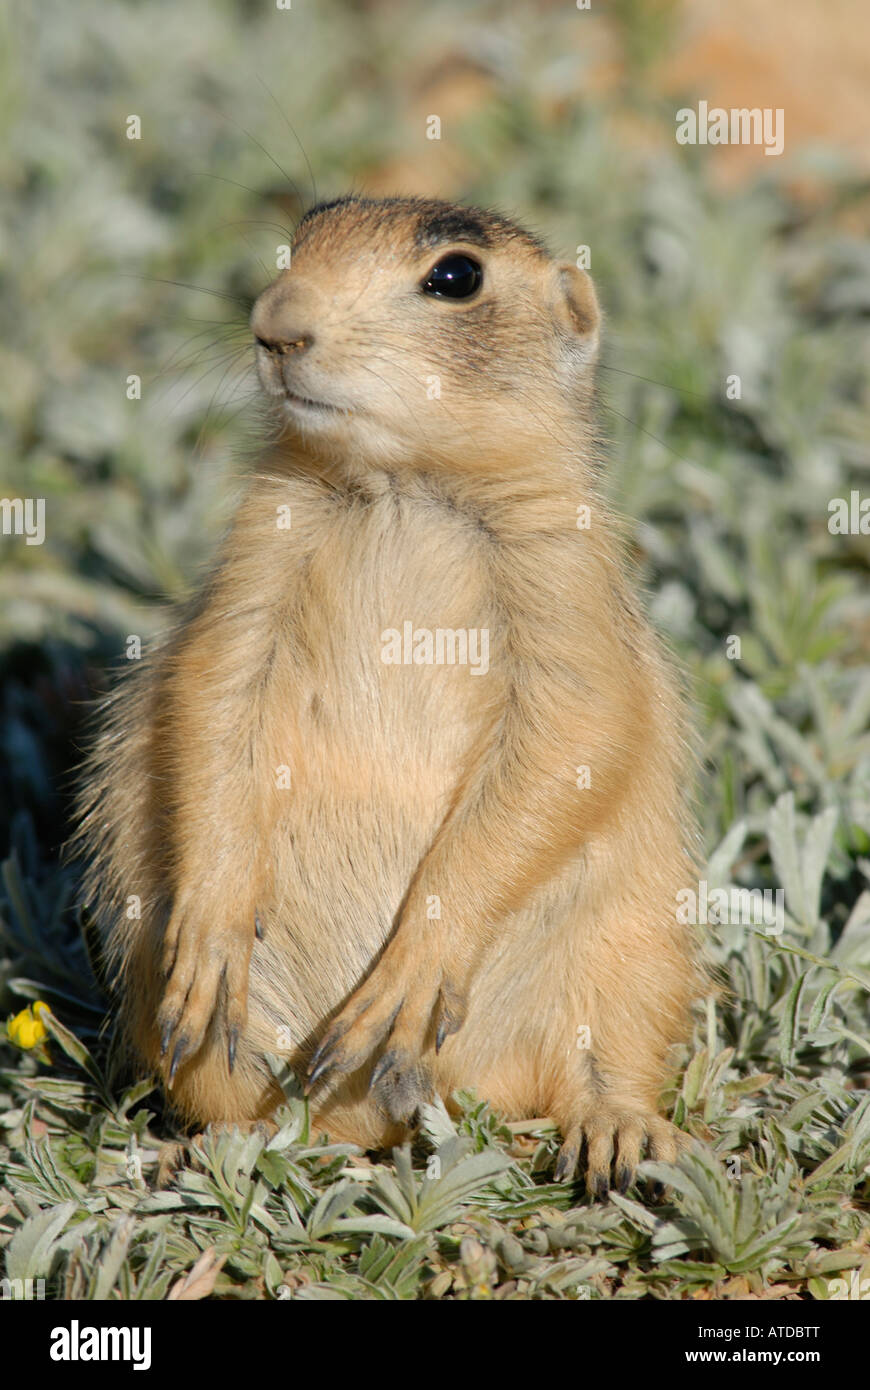 Stock photo of a Utah prairie dog in a sitting posture. Stock Photo